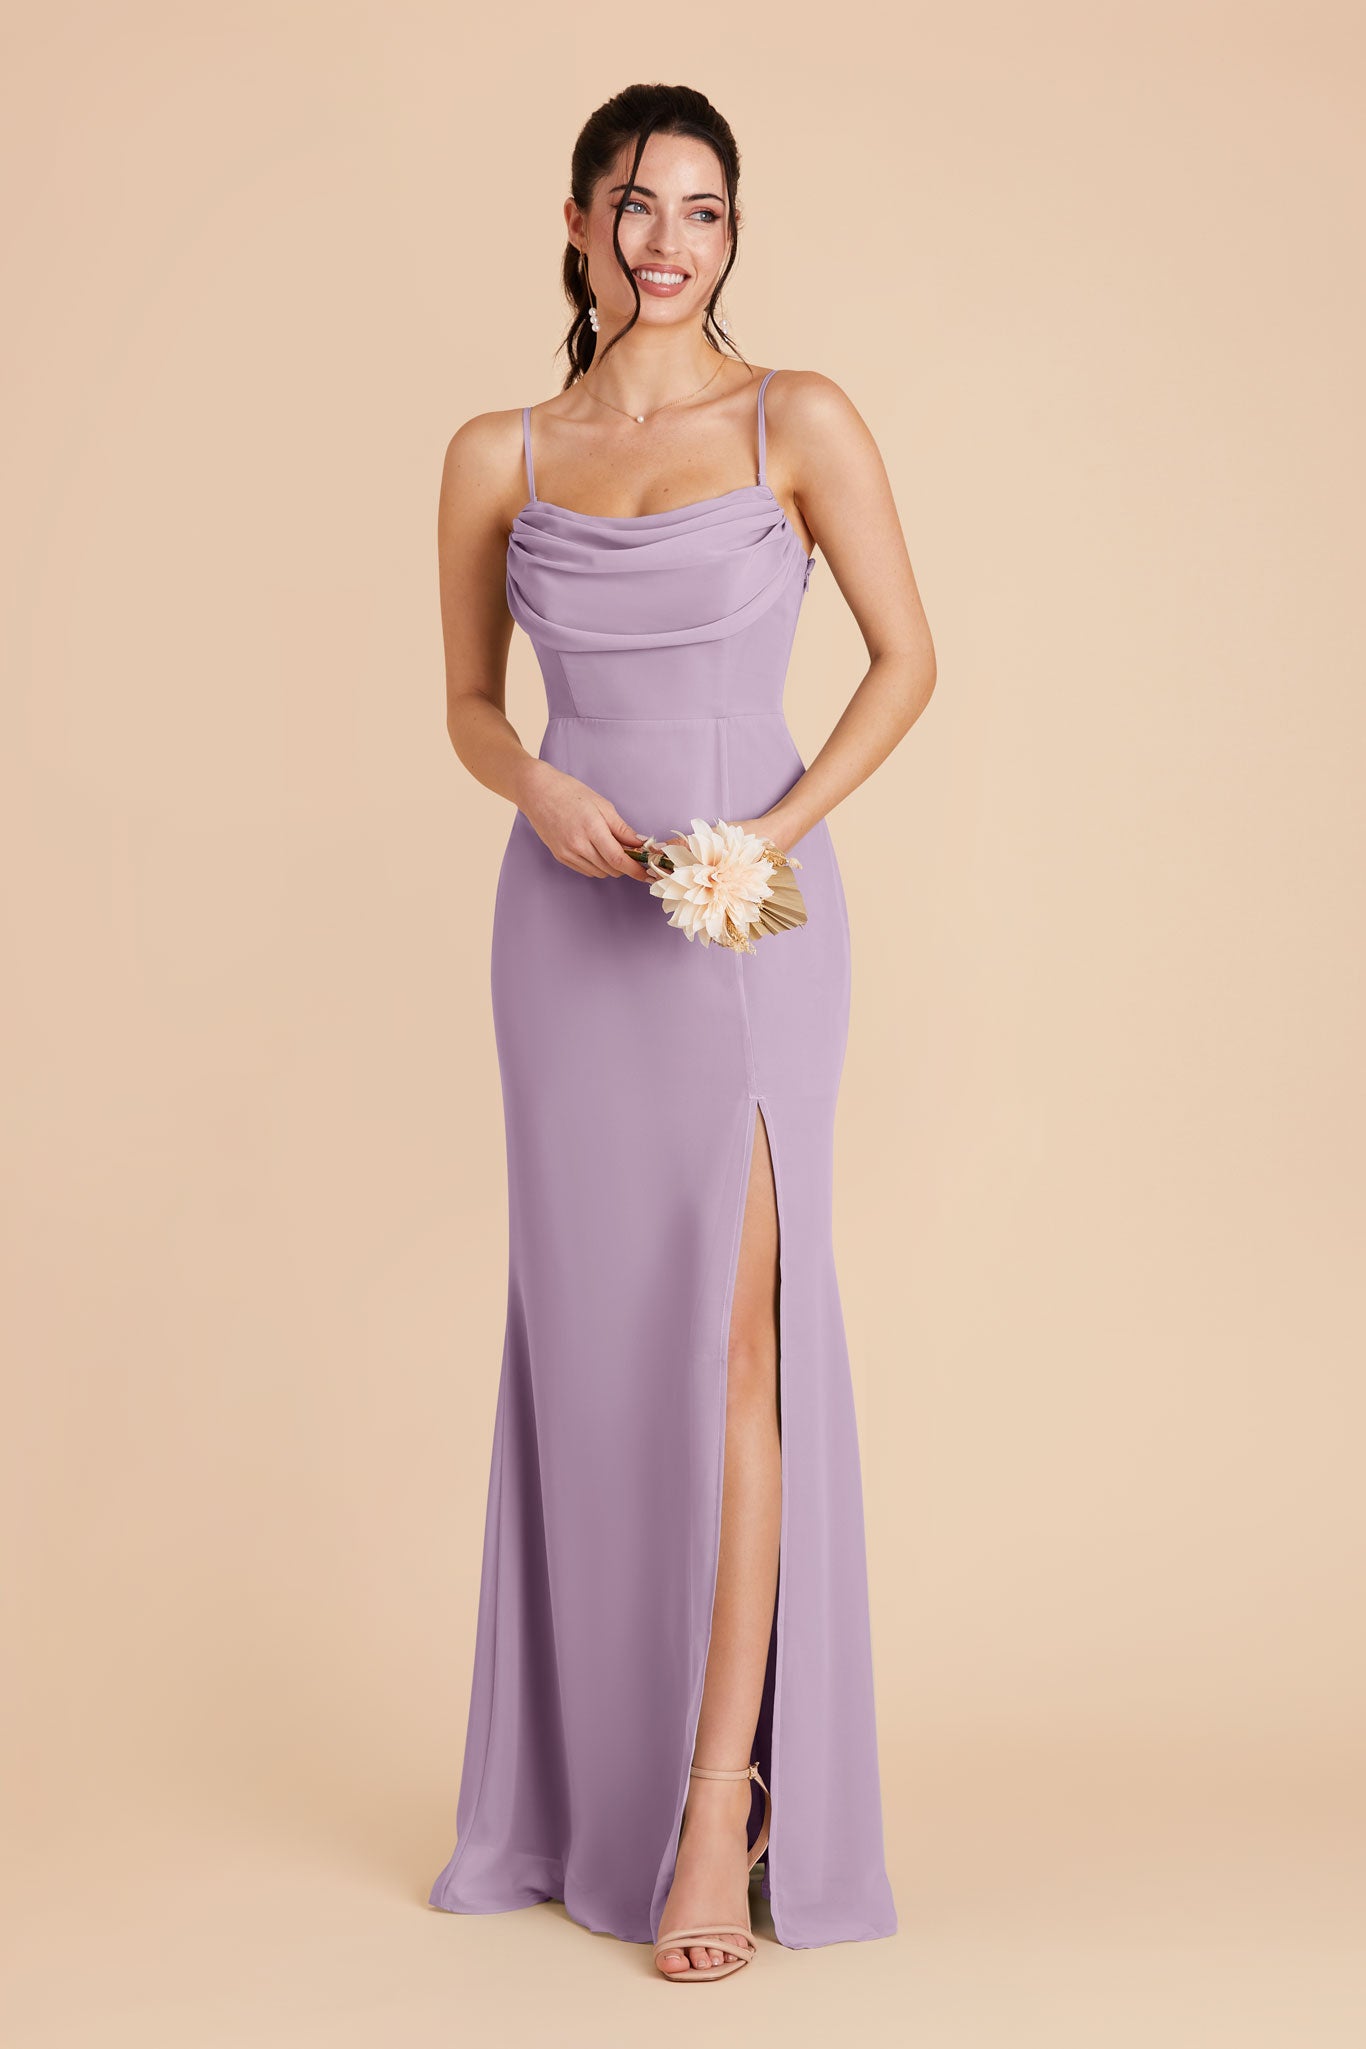 Lavender Mira Convertible Dress by Birdy Grey